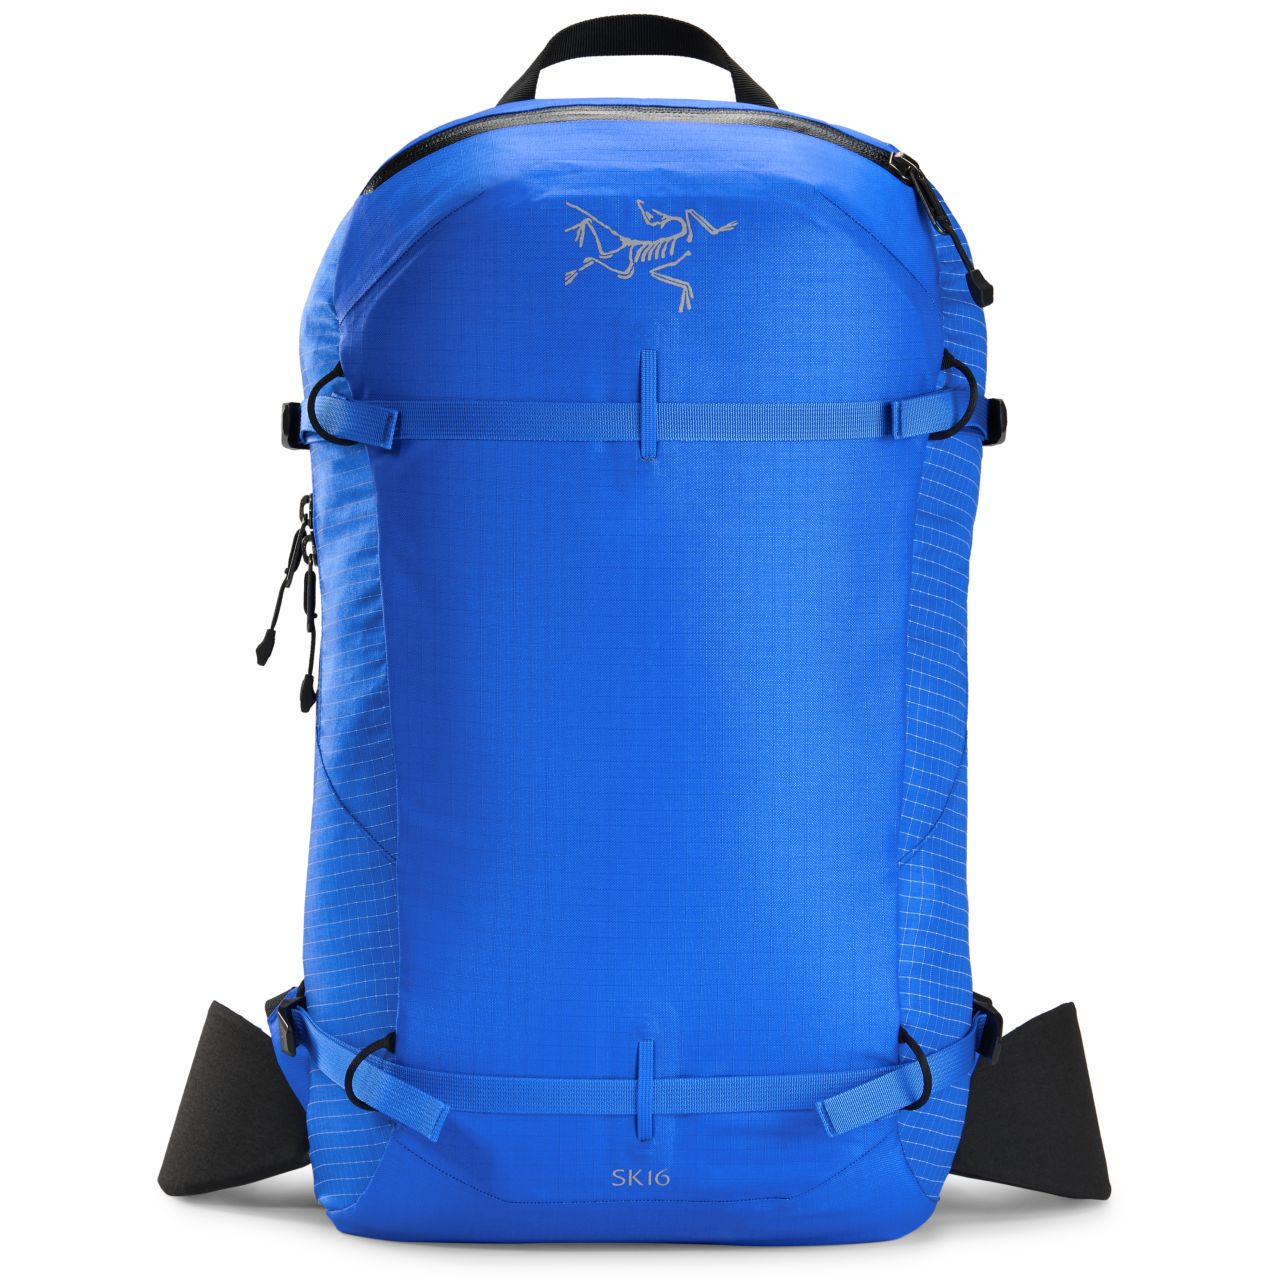 Rush SK 16 Backpack (Fall 2022)